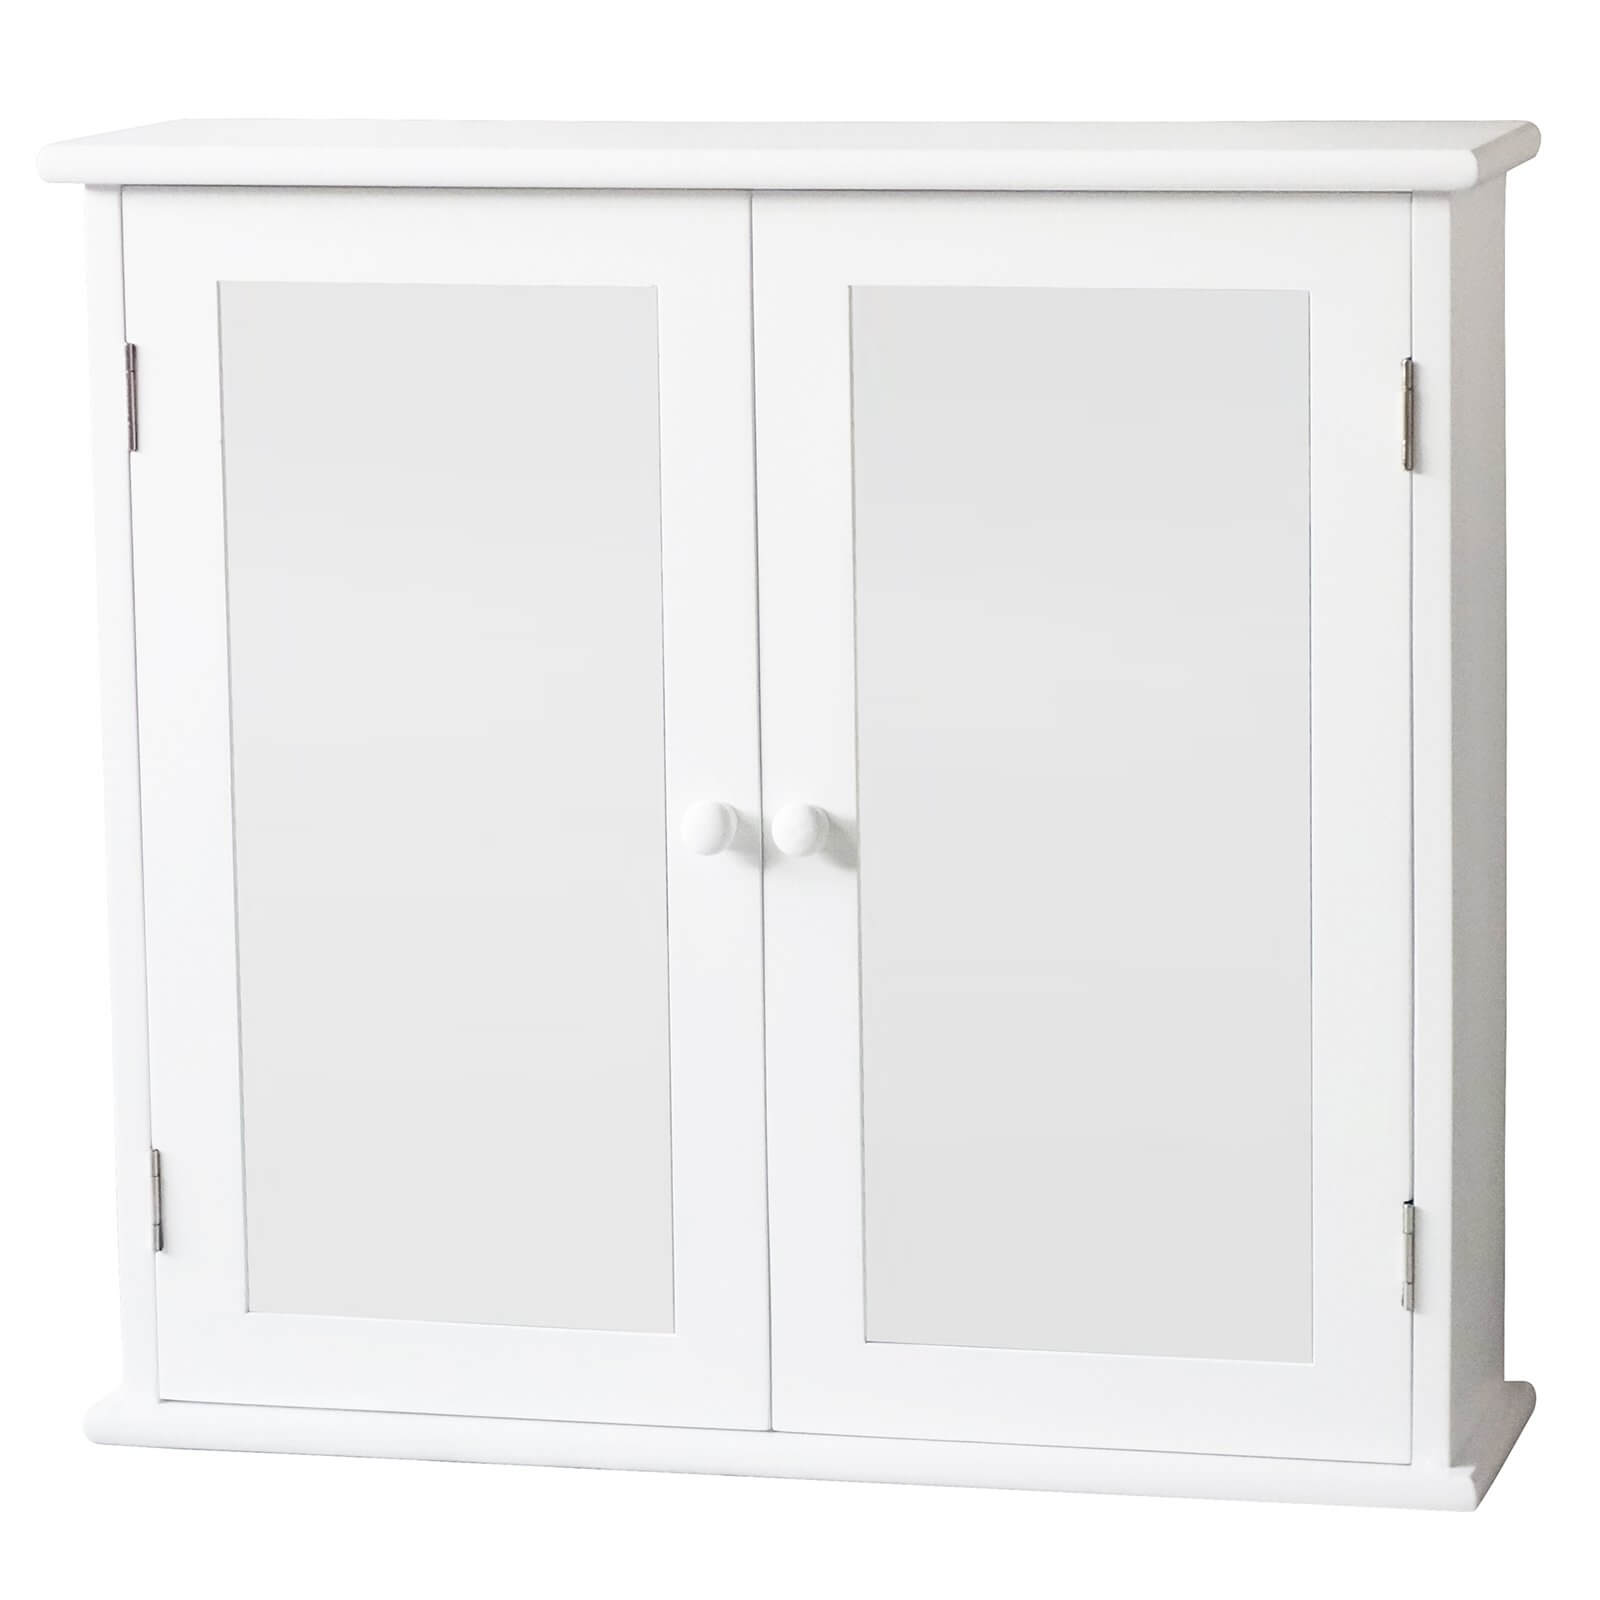 Classic Mirrored Double Door Cabinet - White